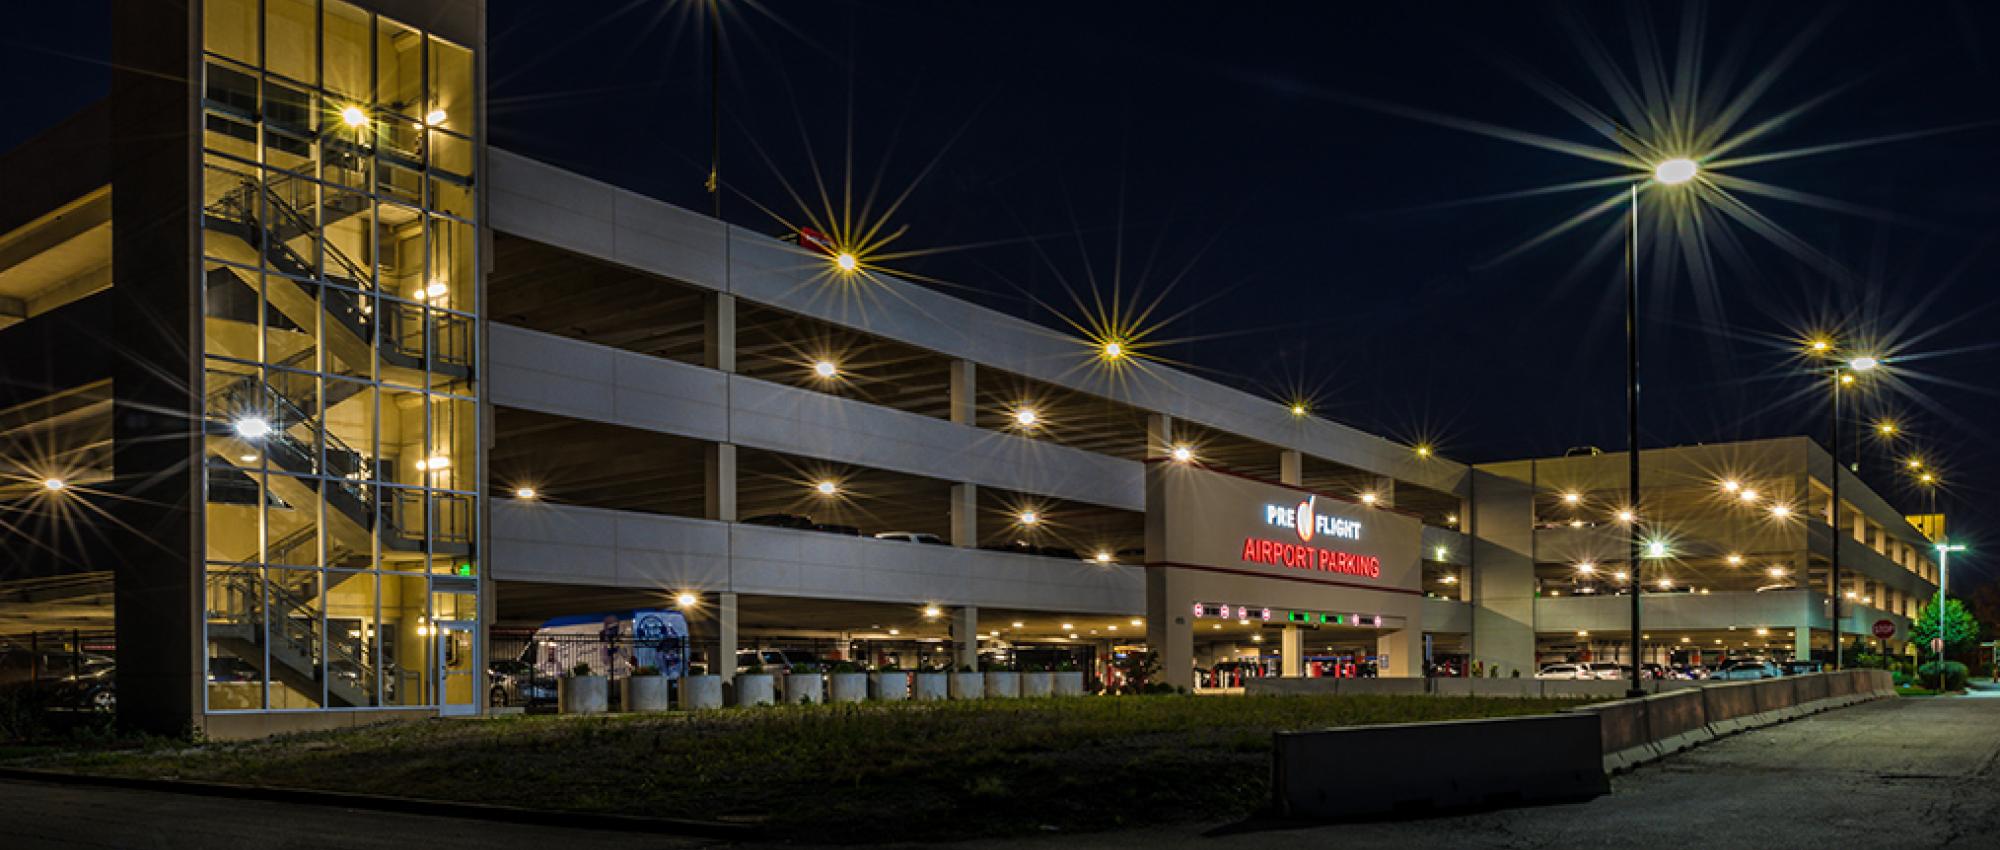 preflight car park boston airport